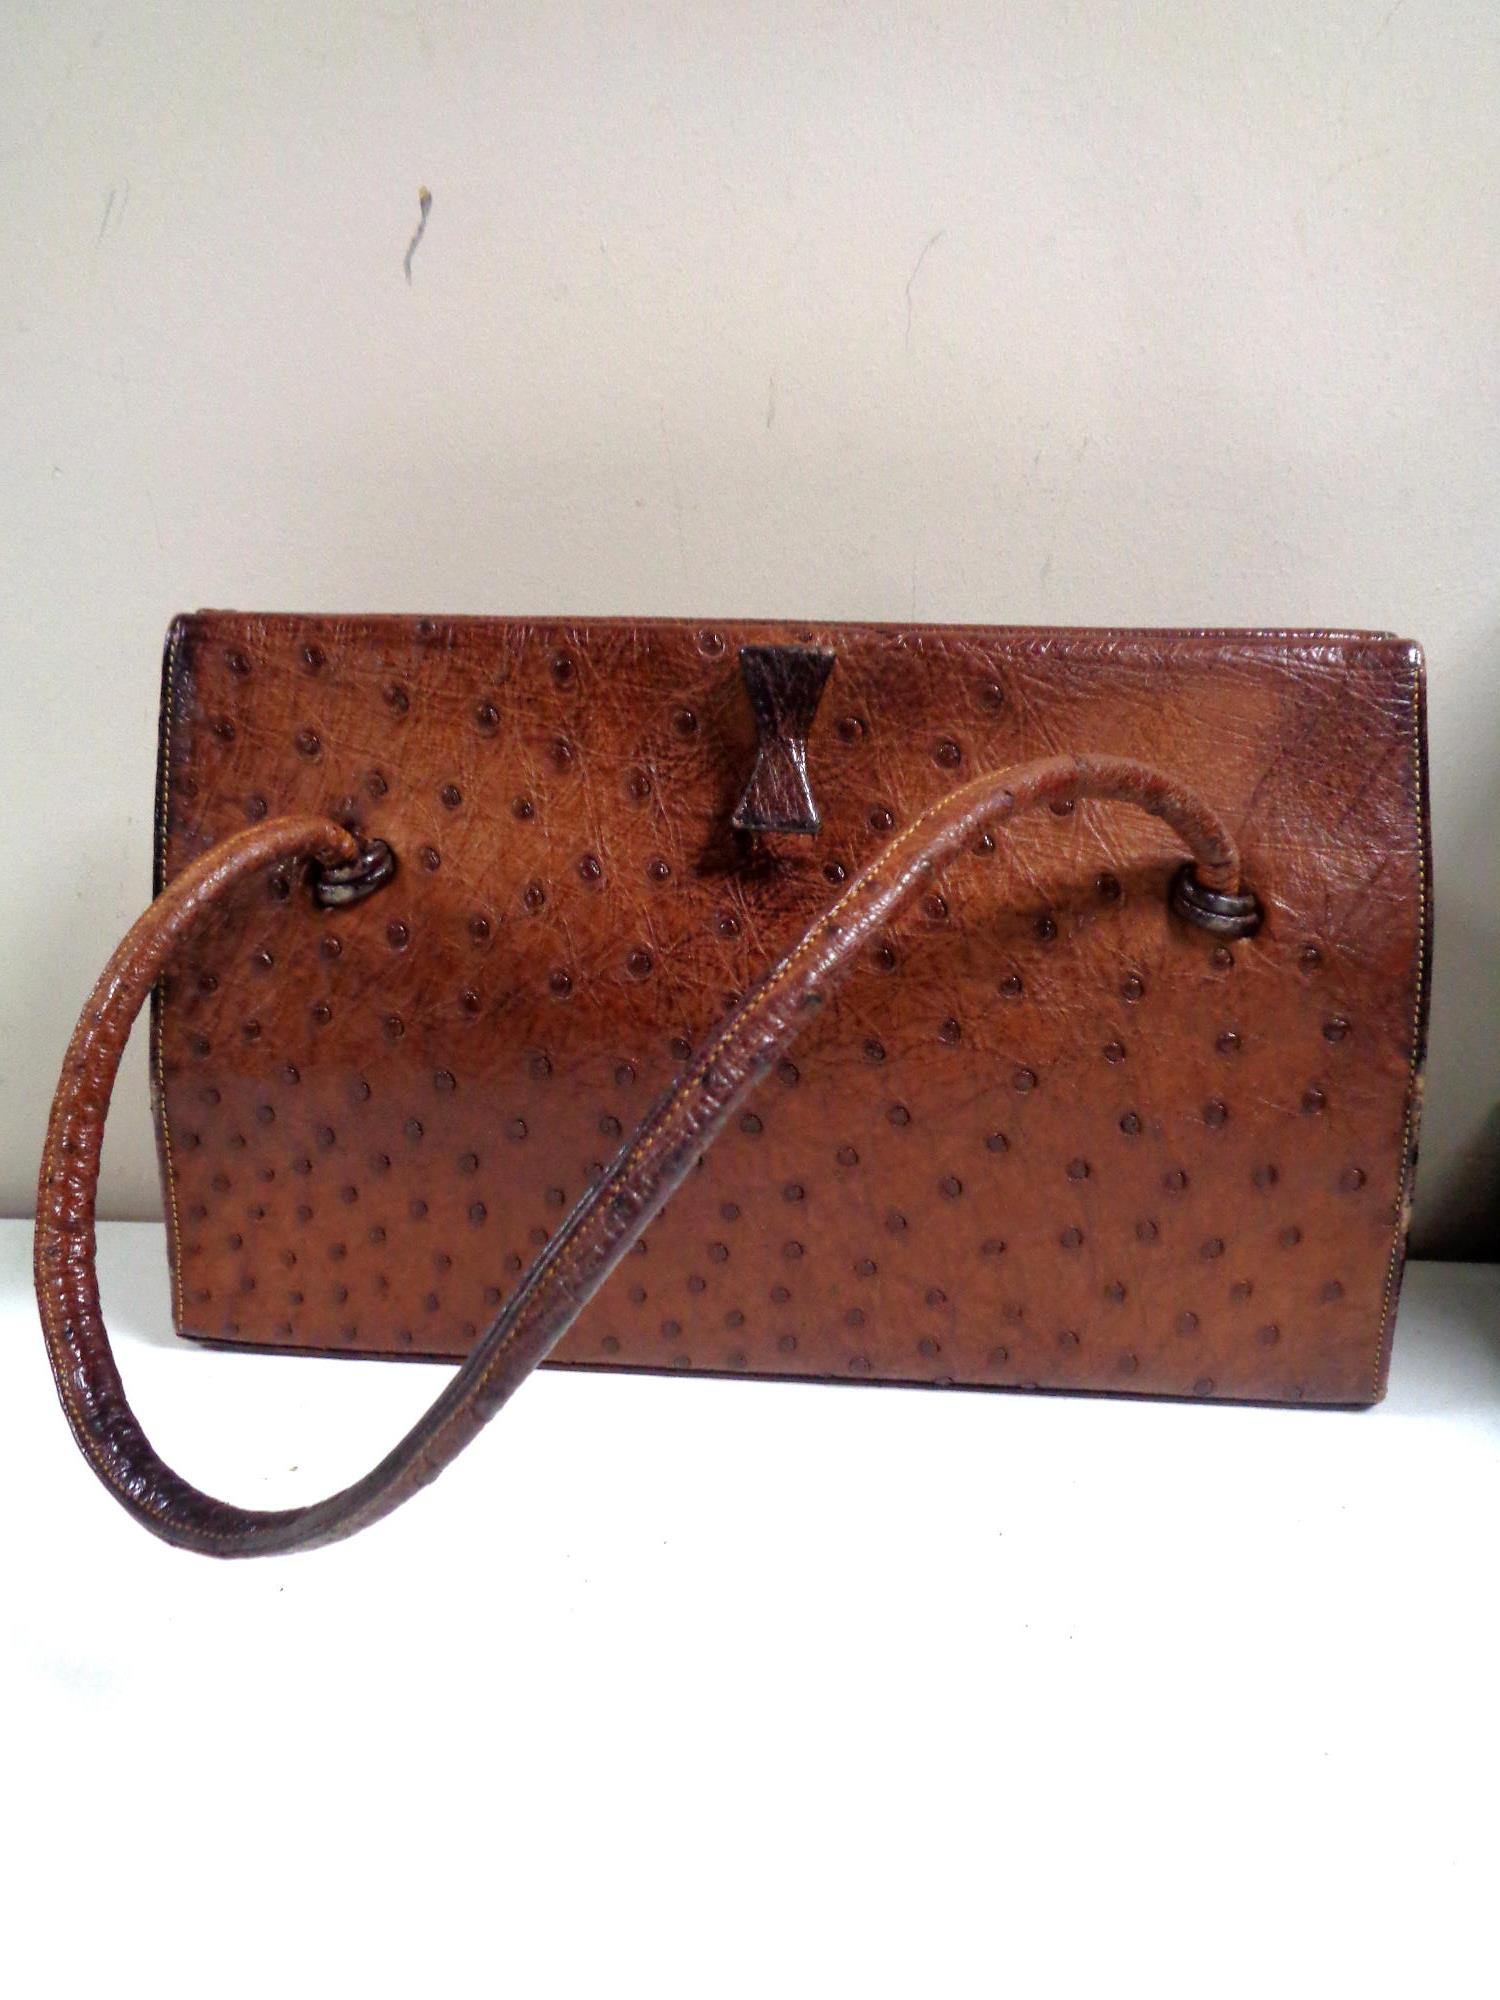 A lady's ostrich leather handbag